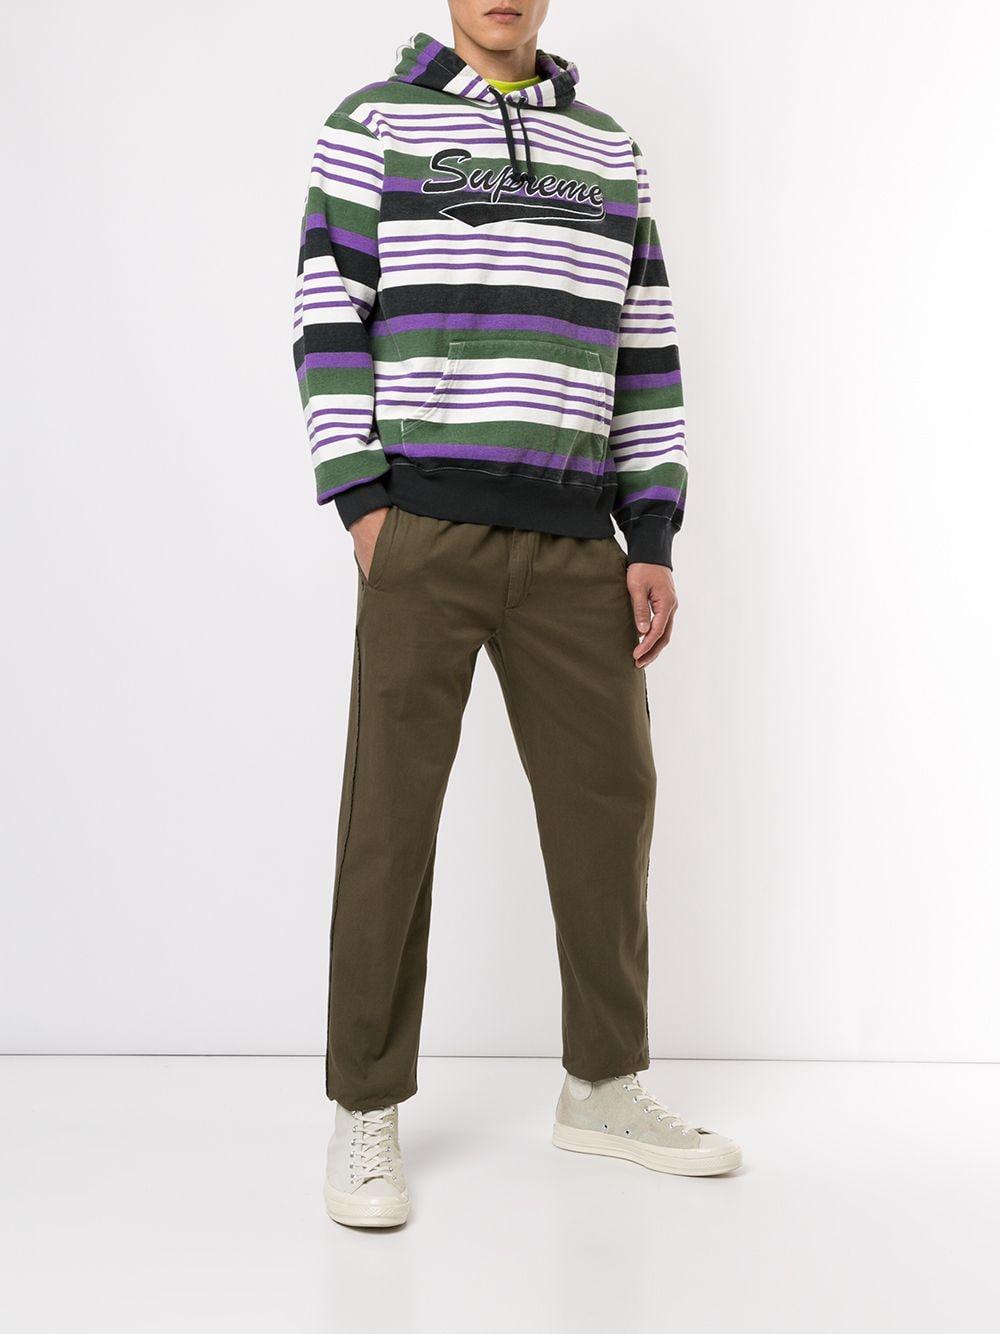 Supreme Cotton Stripe Hooded Sweatshirt in Green for Men - Lyst